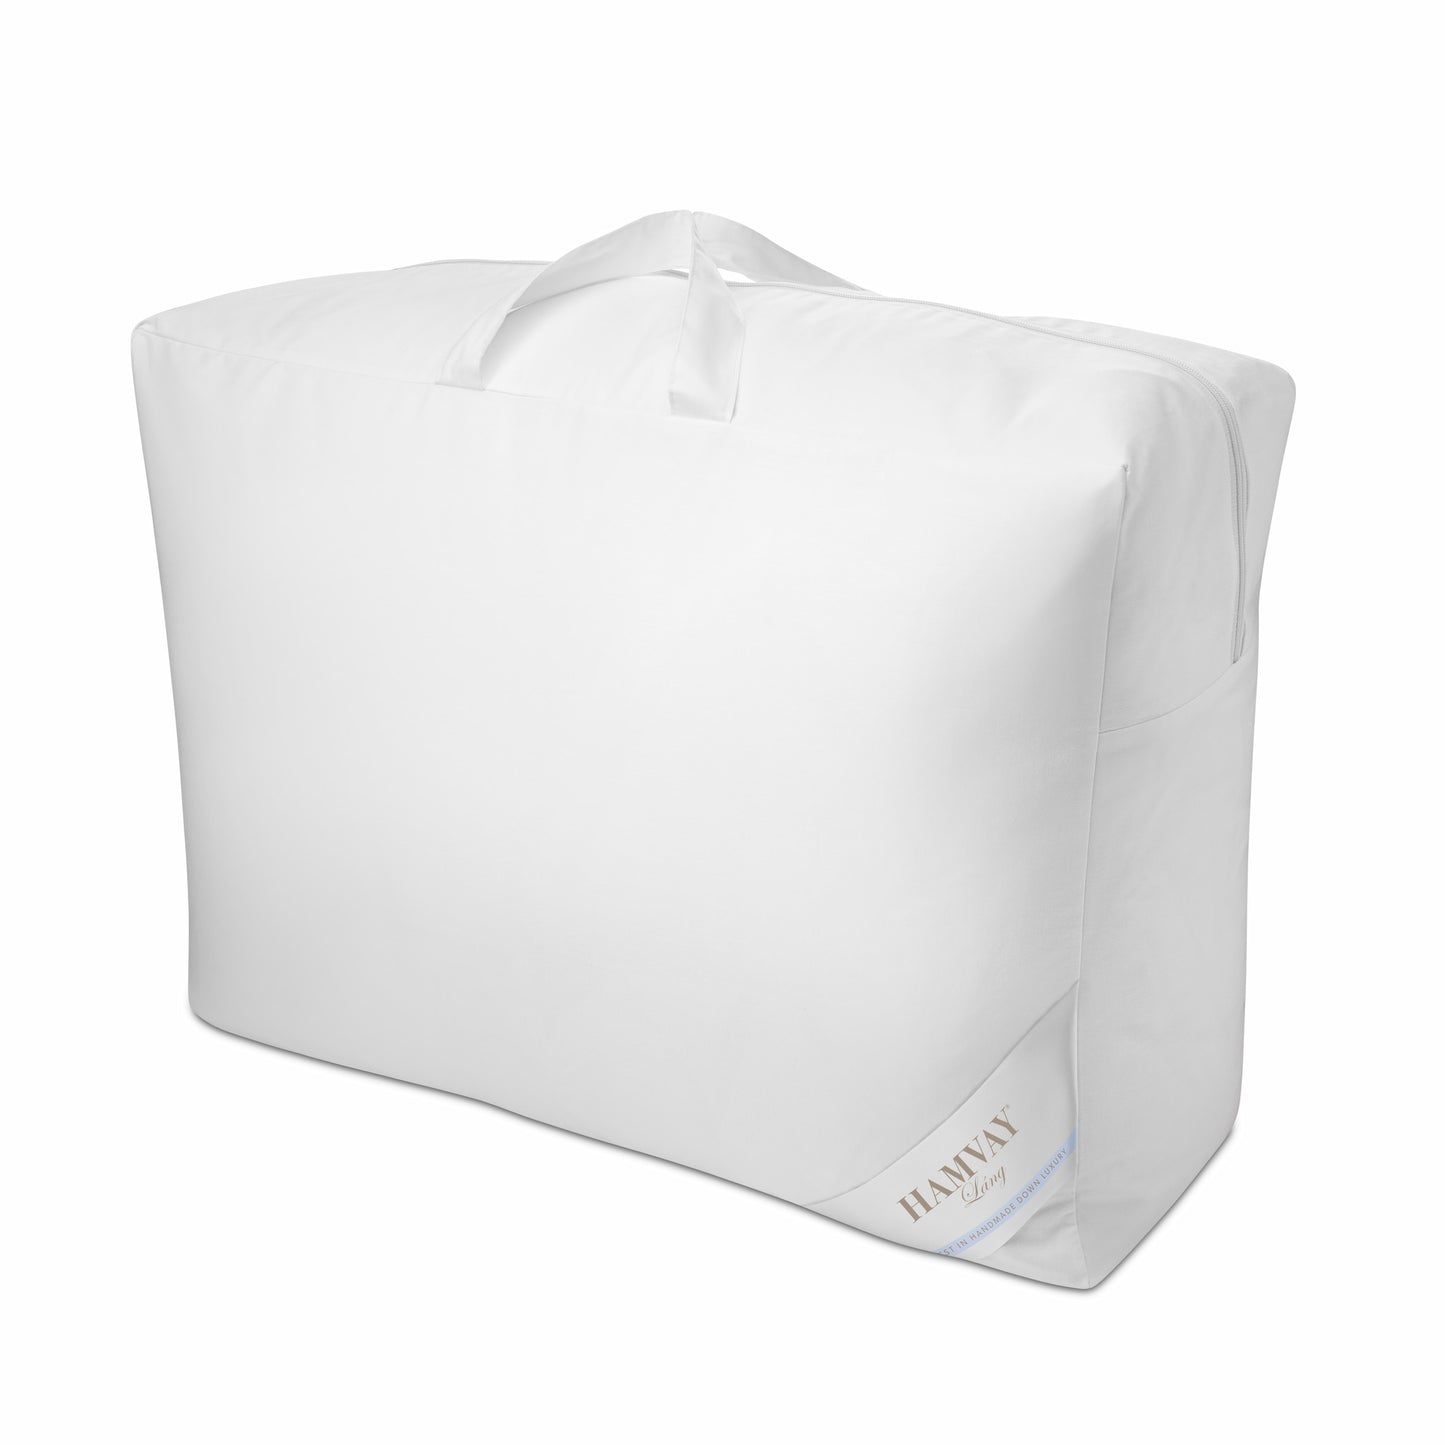 Hamvay-Láng white storage bag